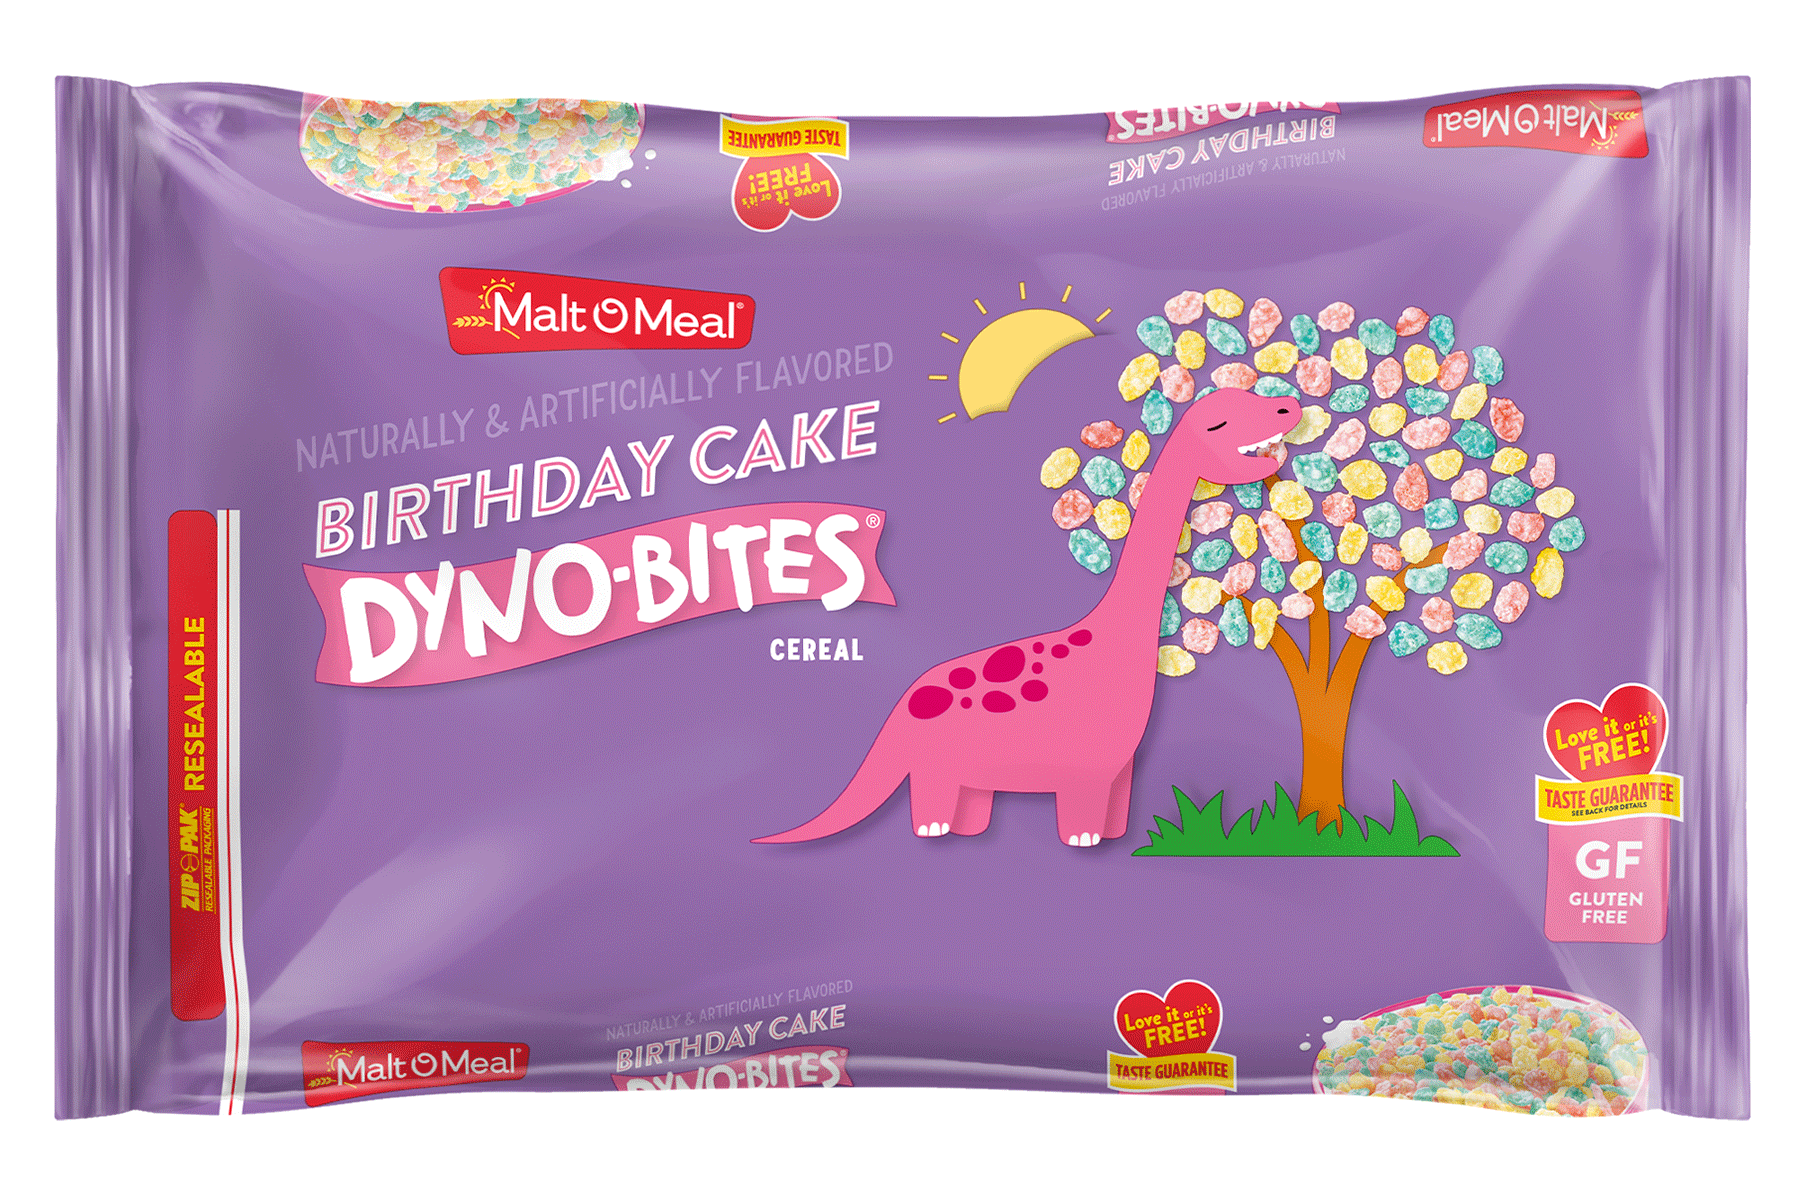 New Malt-O-Meal Birthday Cake Dyno Bites cereal